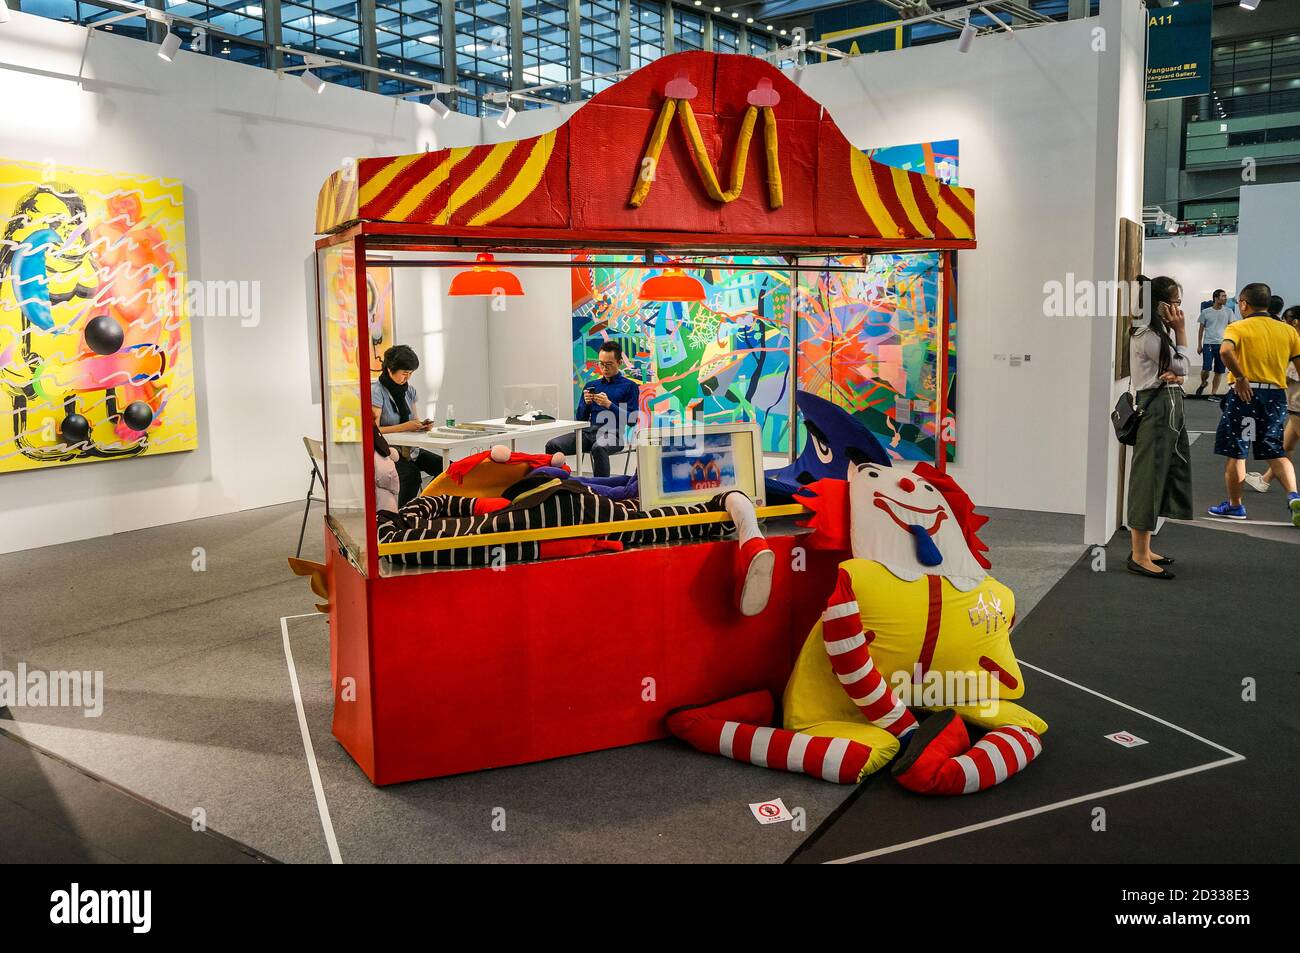 McDonald inspired art on display in Shenzhen, China Stock Photo